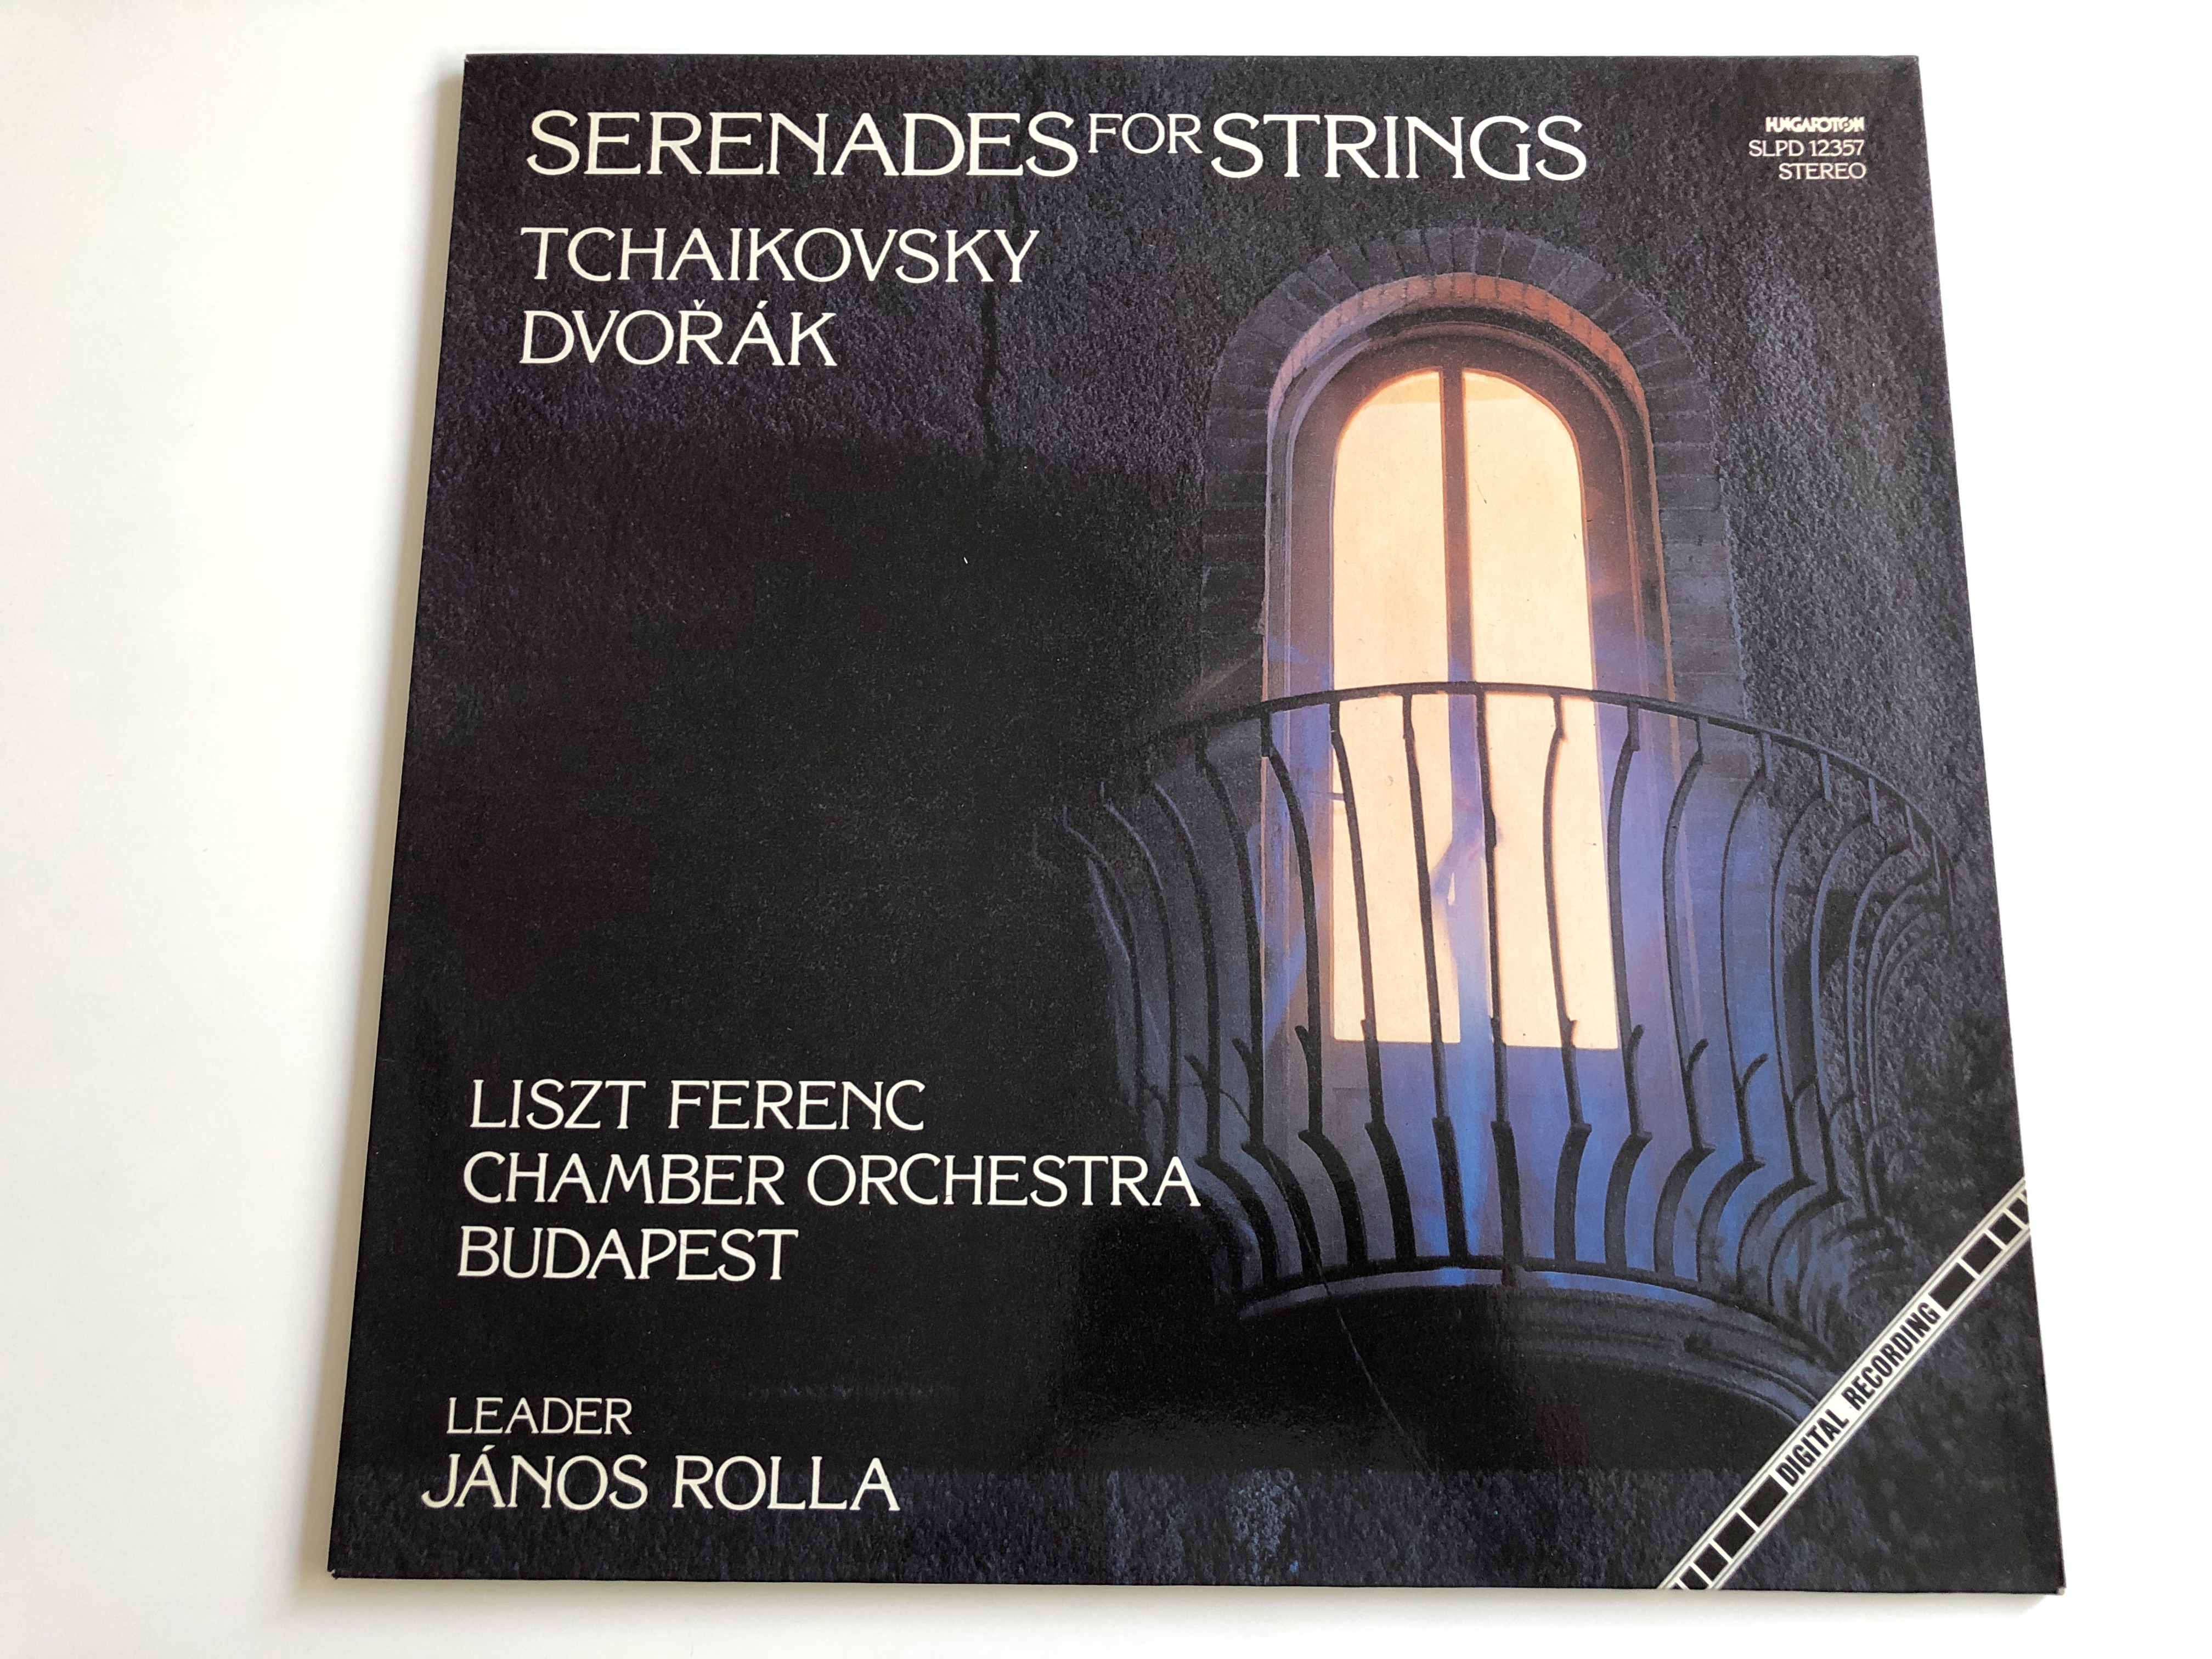 serenades-for-strings-tchaikovsky-dvo-k-liszt-ferenc-chamber-orchestra-budapest-leader-j-nos-rolla-hungaroton-lp-stereo-slpd-12357-1-.jpg